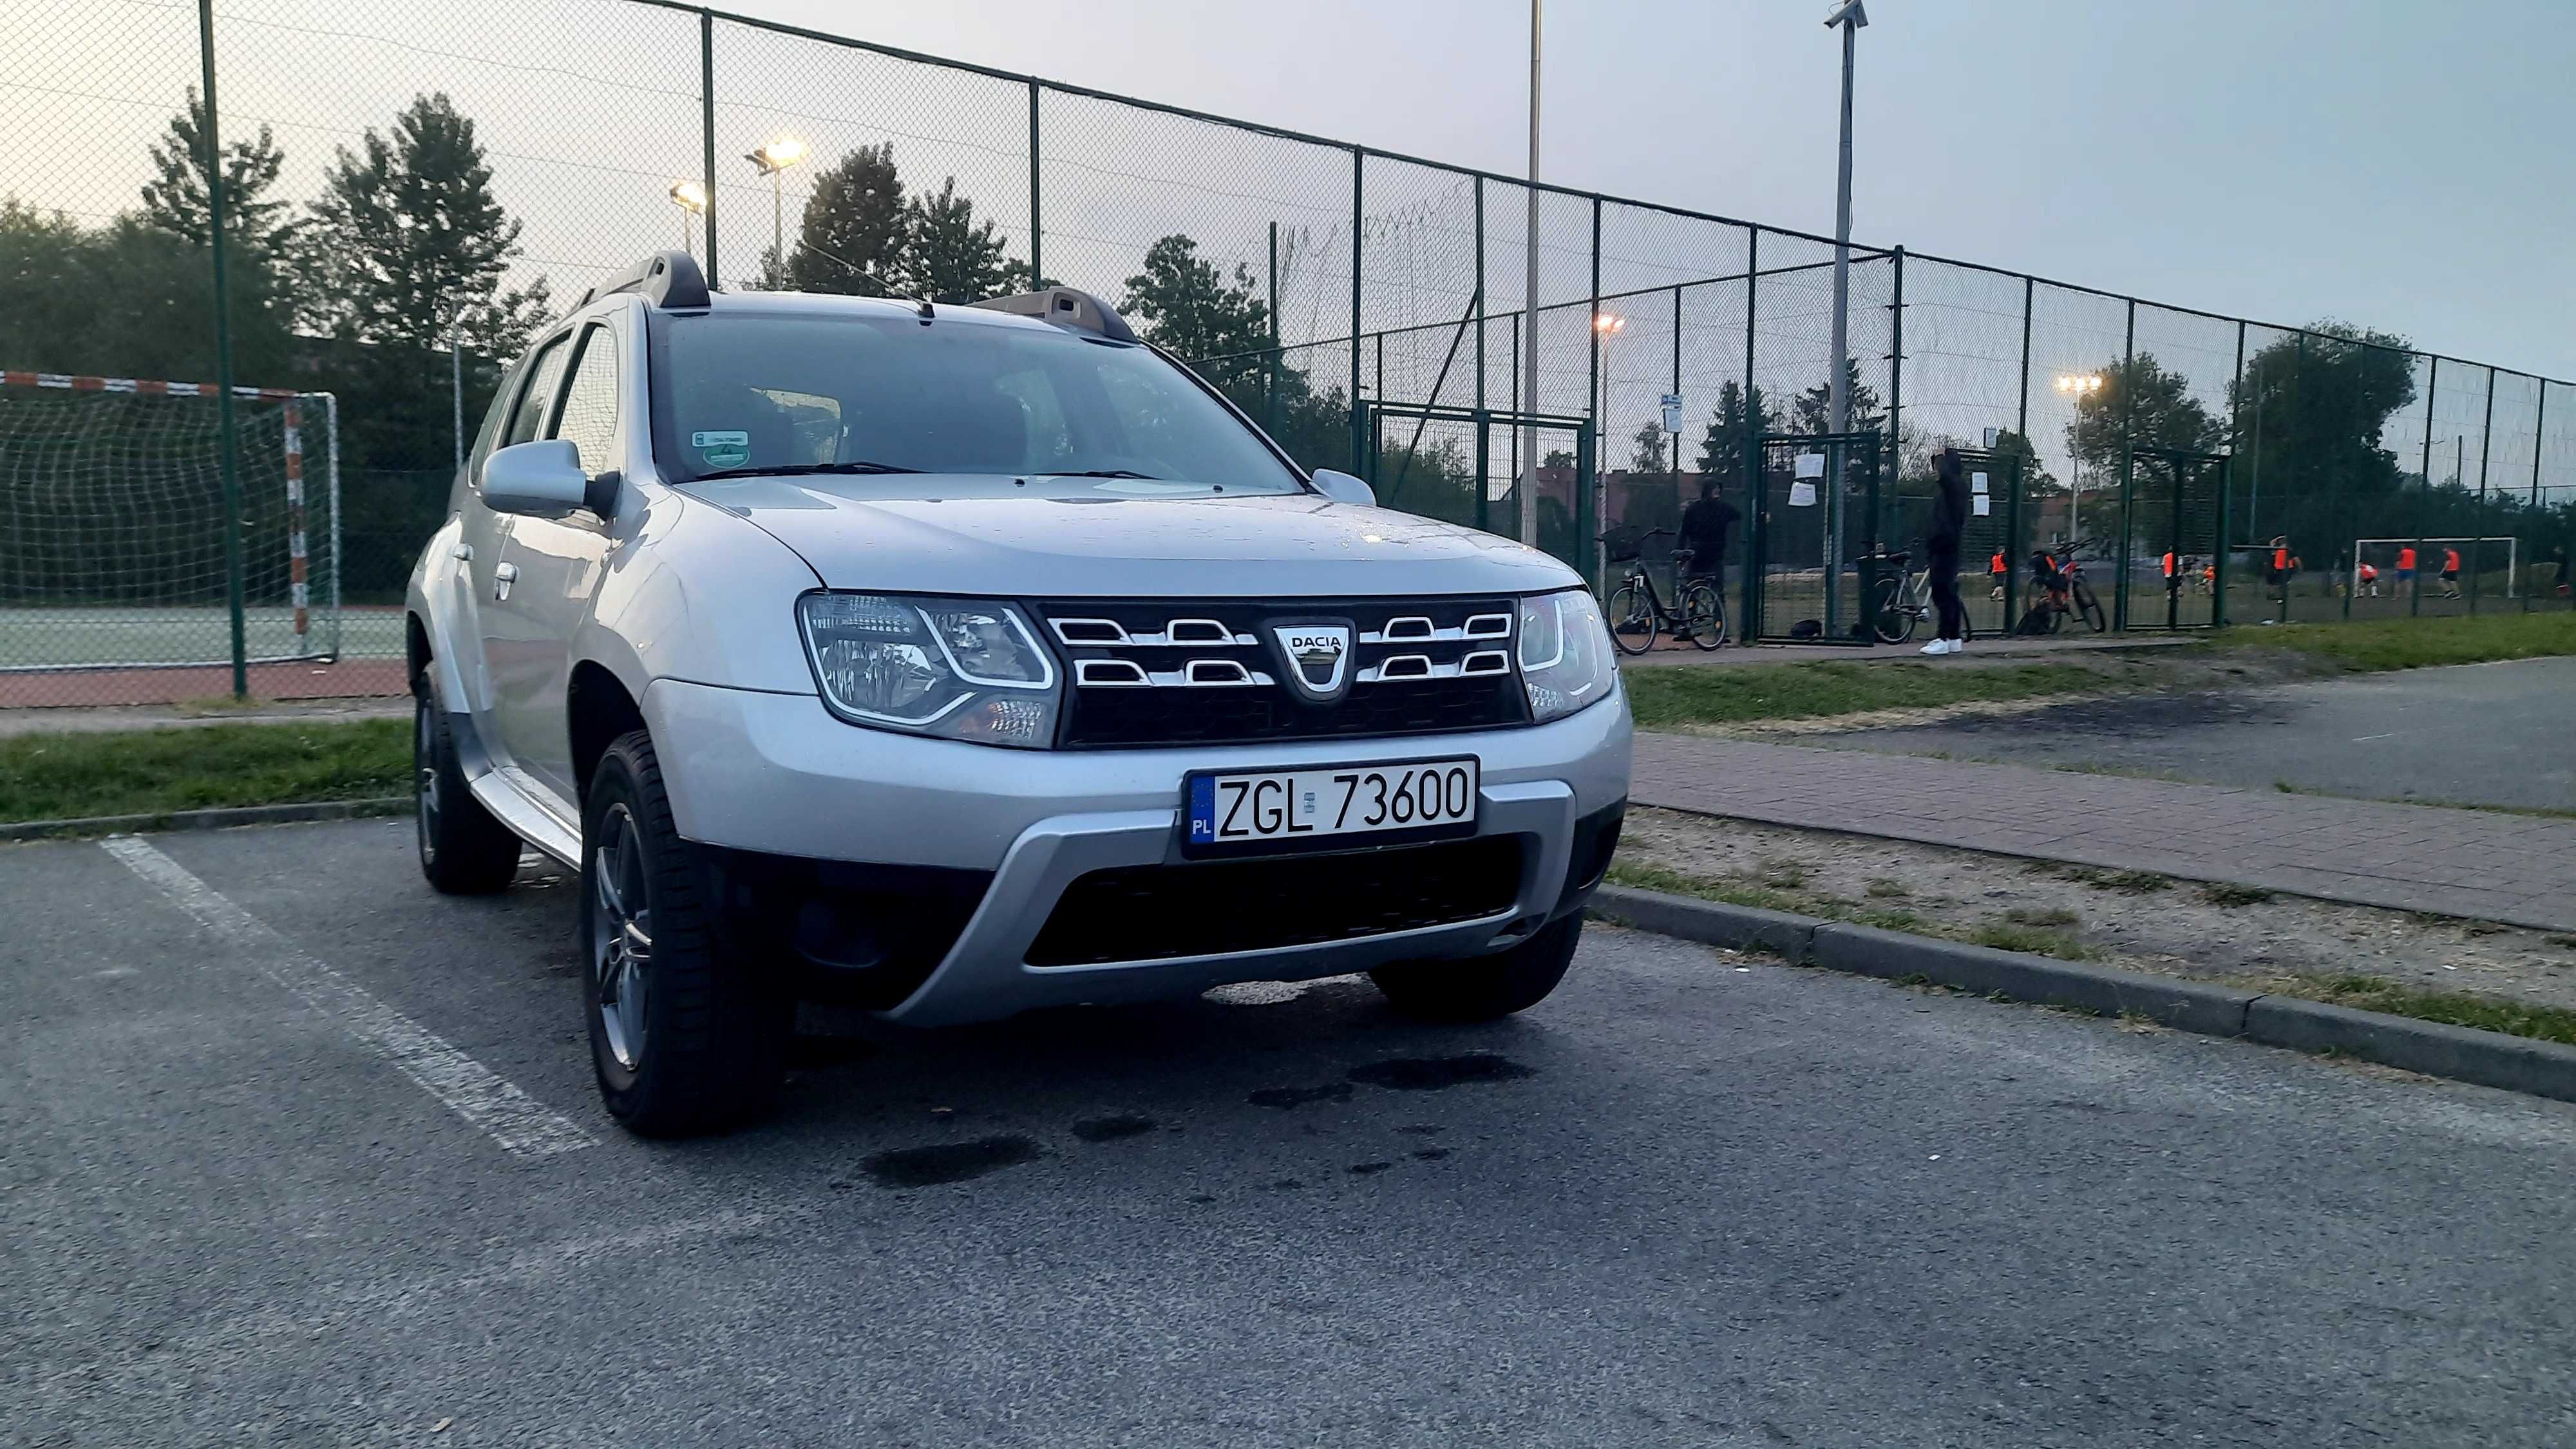 Dacia Duster 1.6 16v  88t.km klima hak